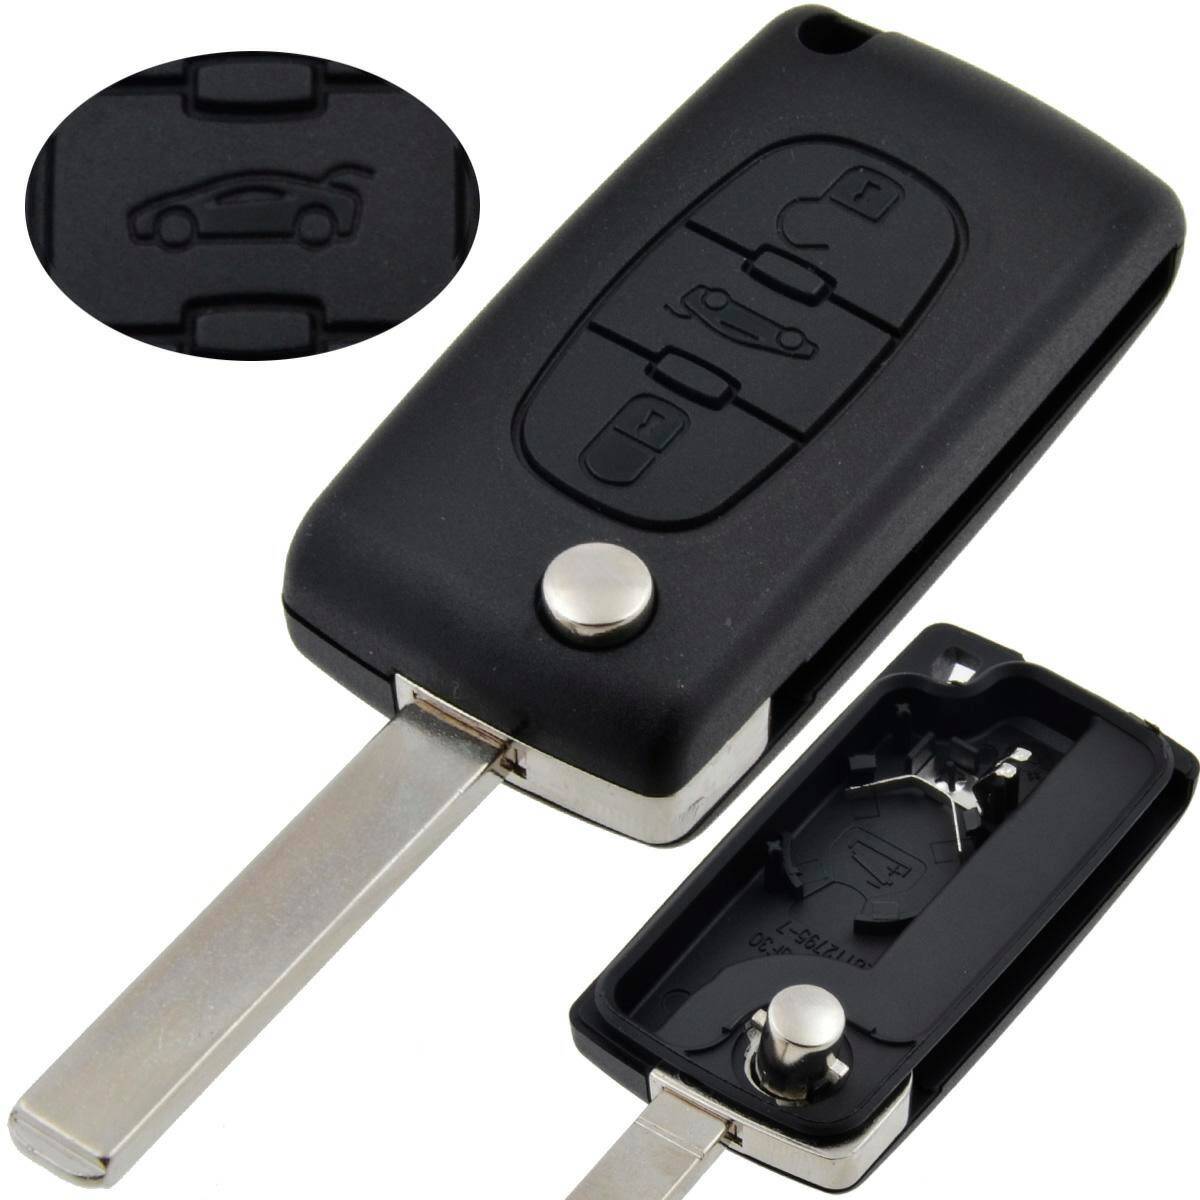 Keyline ISU5TK - Isuzu  Motokey online store - Keys, Remotes, Accessories,  Locks